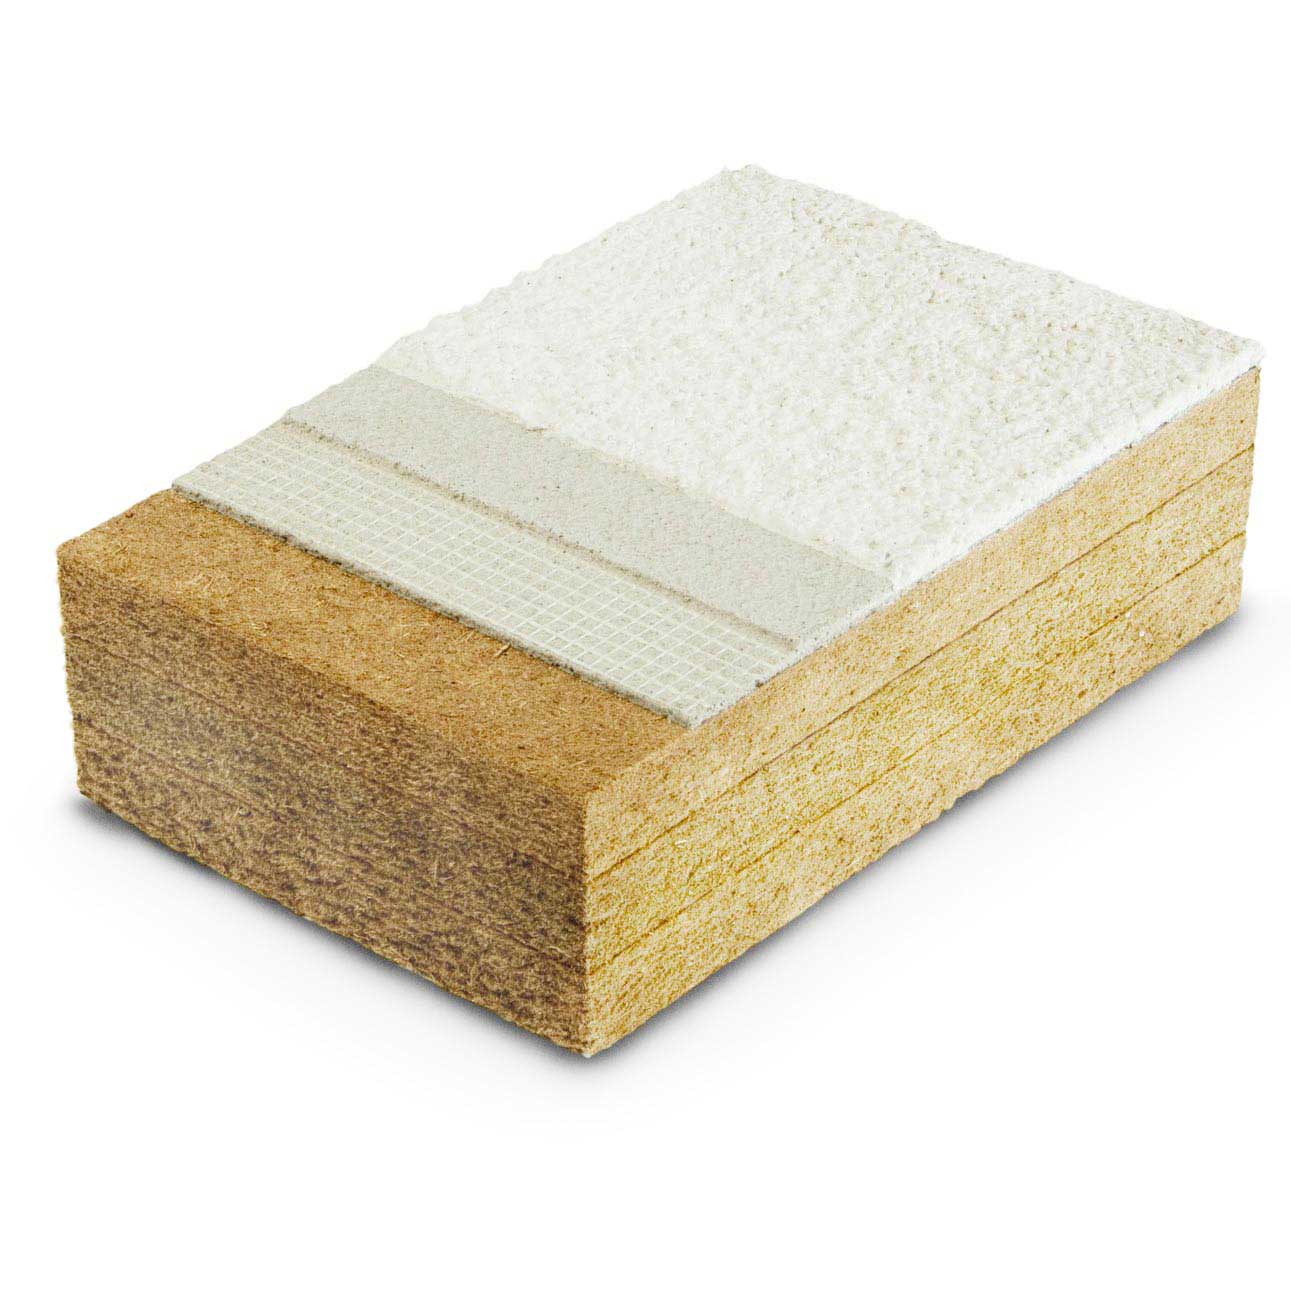 Fibra di legno CAM Protect dry densità 110, 140, 180kg/m³